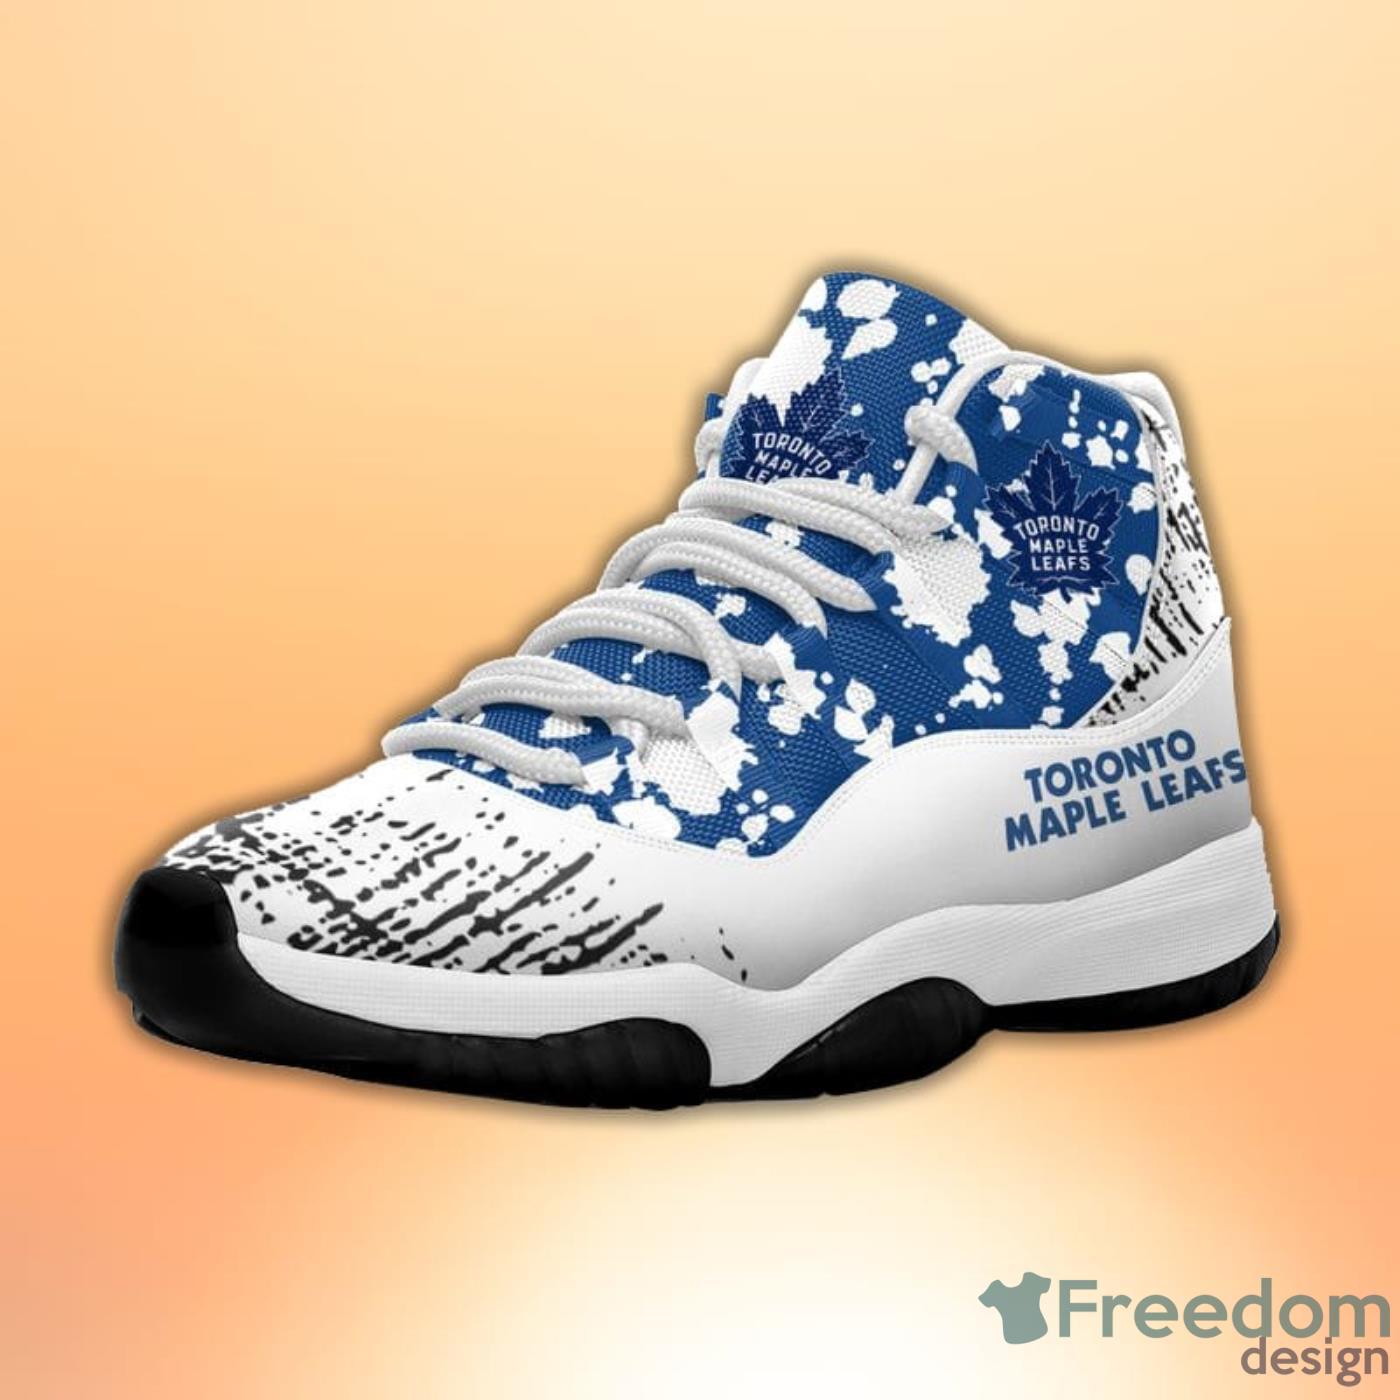 Toronto Maple Leafs Fans Pattern Camo Style Sneaker Air Jordan 11 Shoes -  Freedomdesign